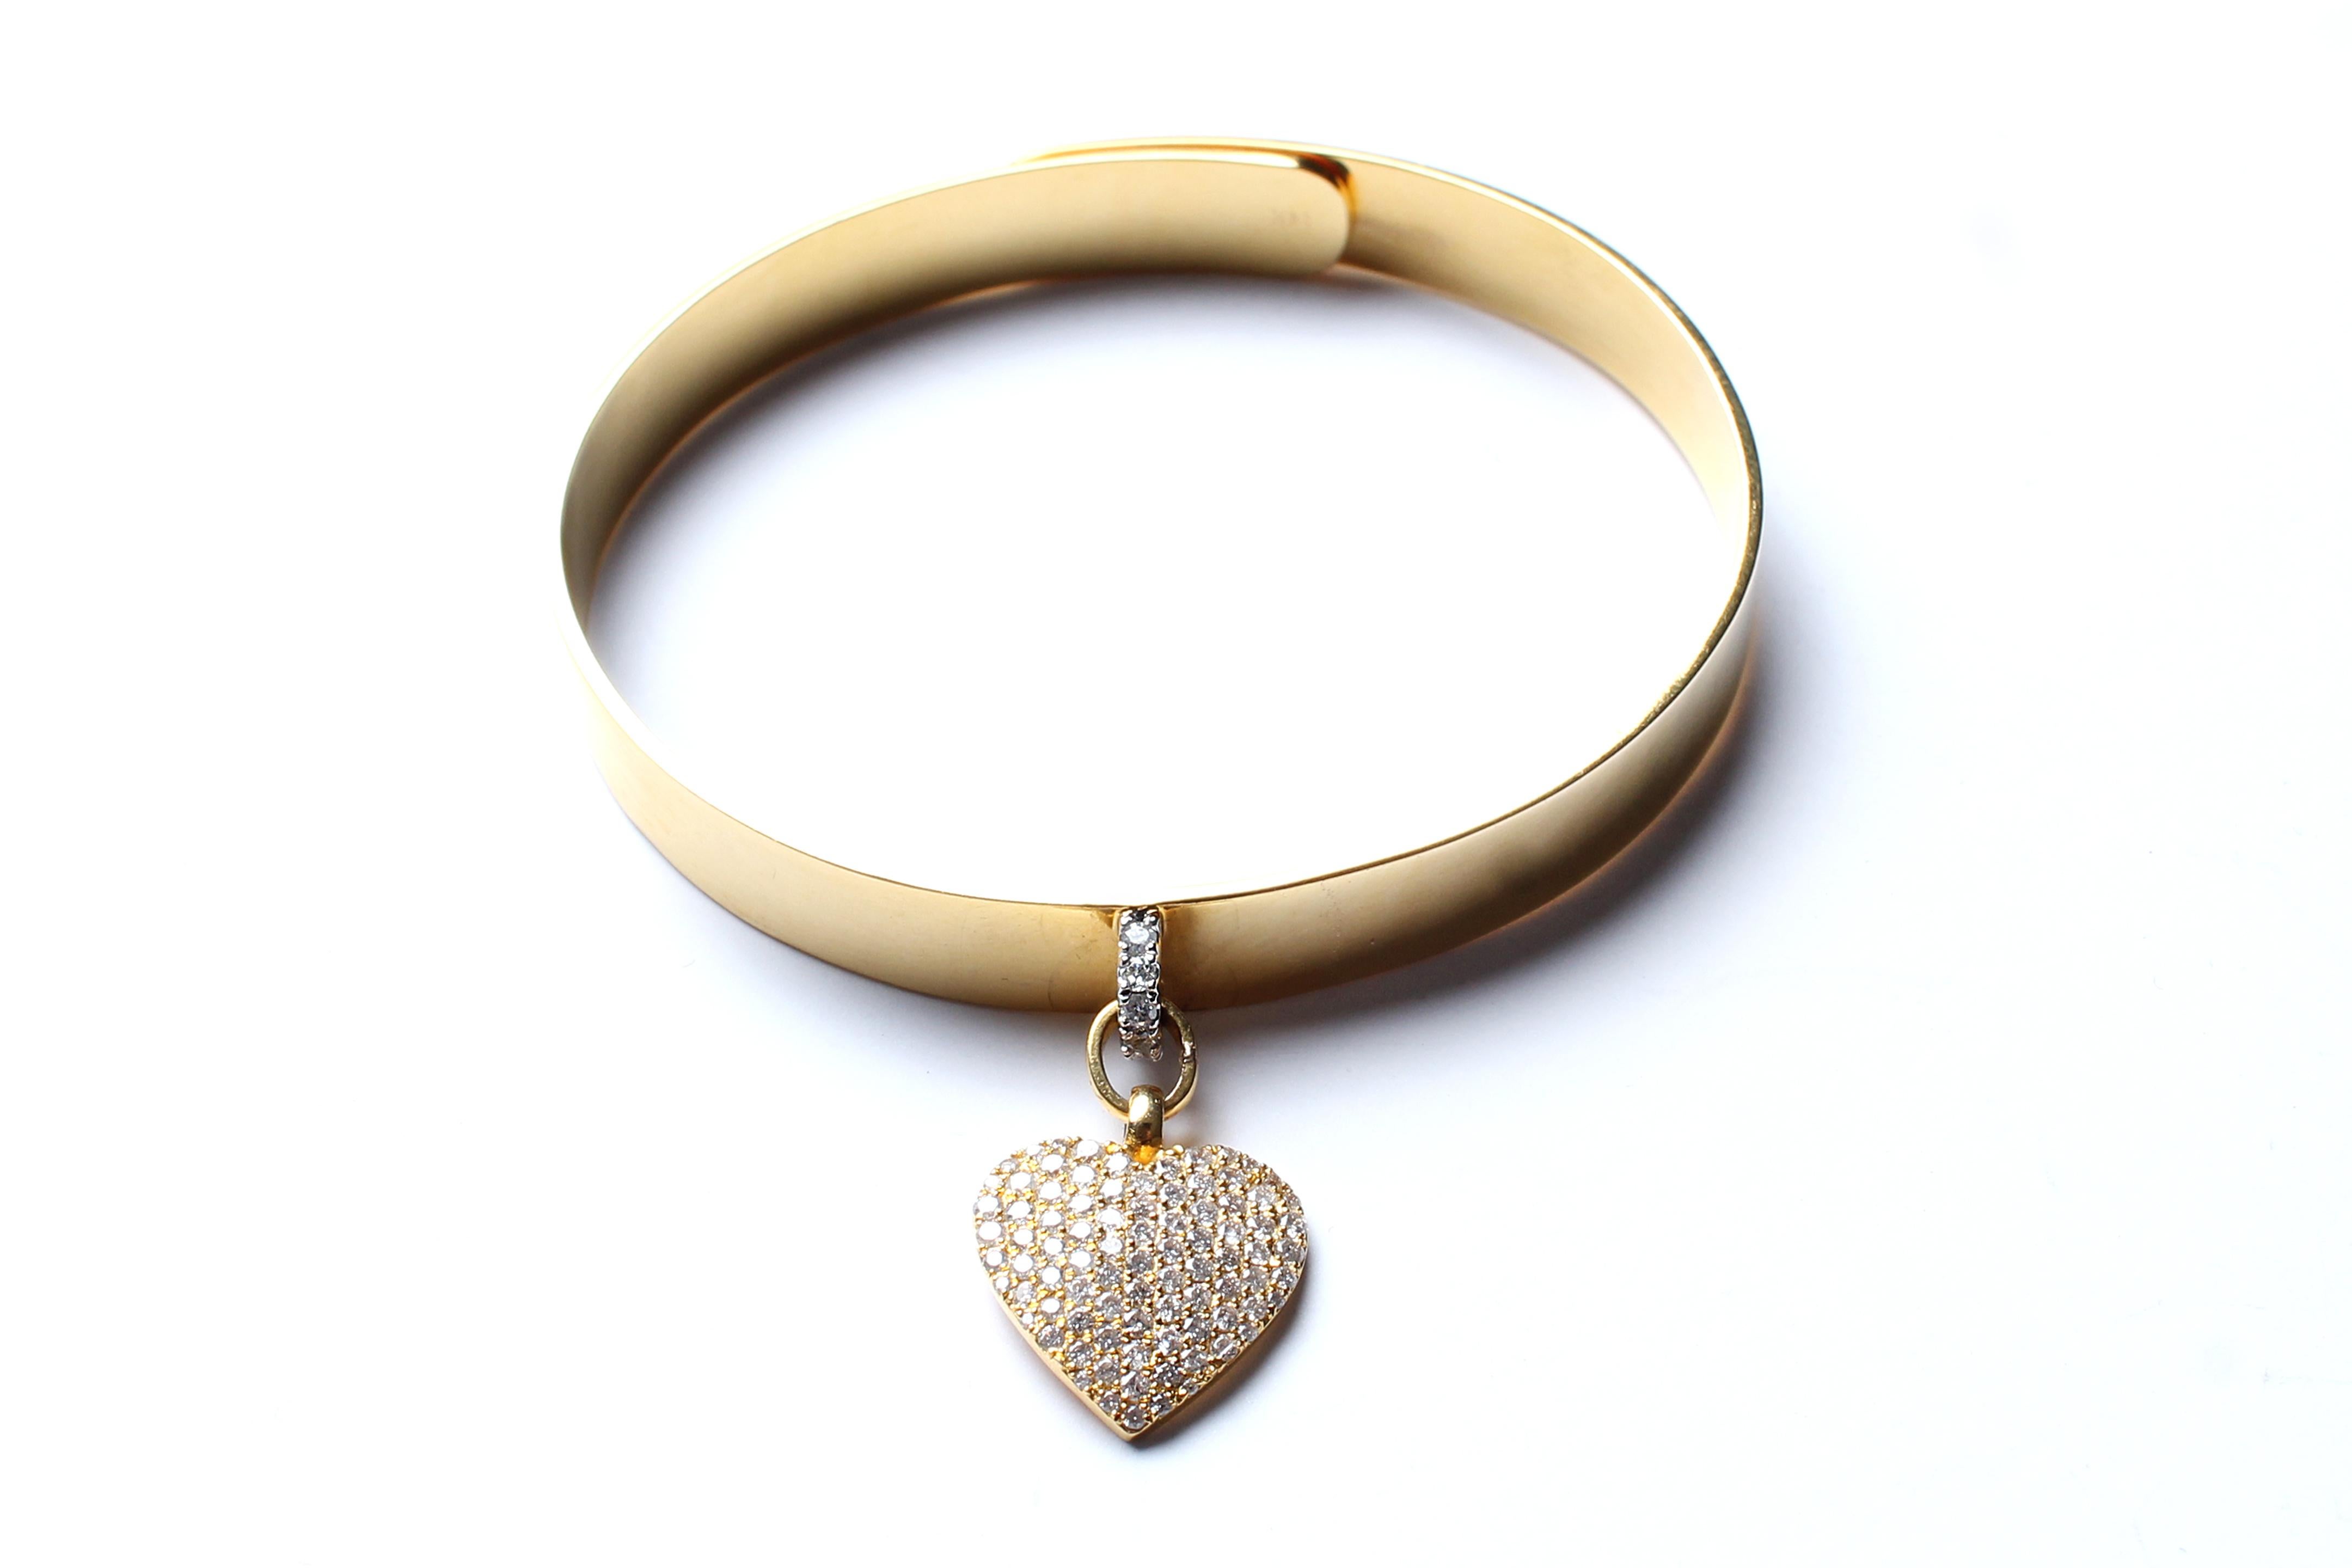 Modern Clarissa Bronfman 14k Gold Bangle with Diamond Heart